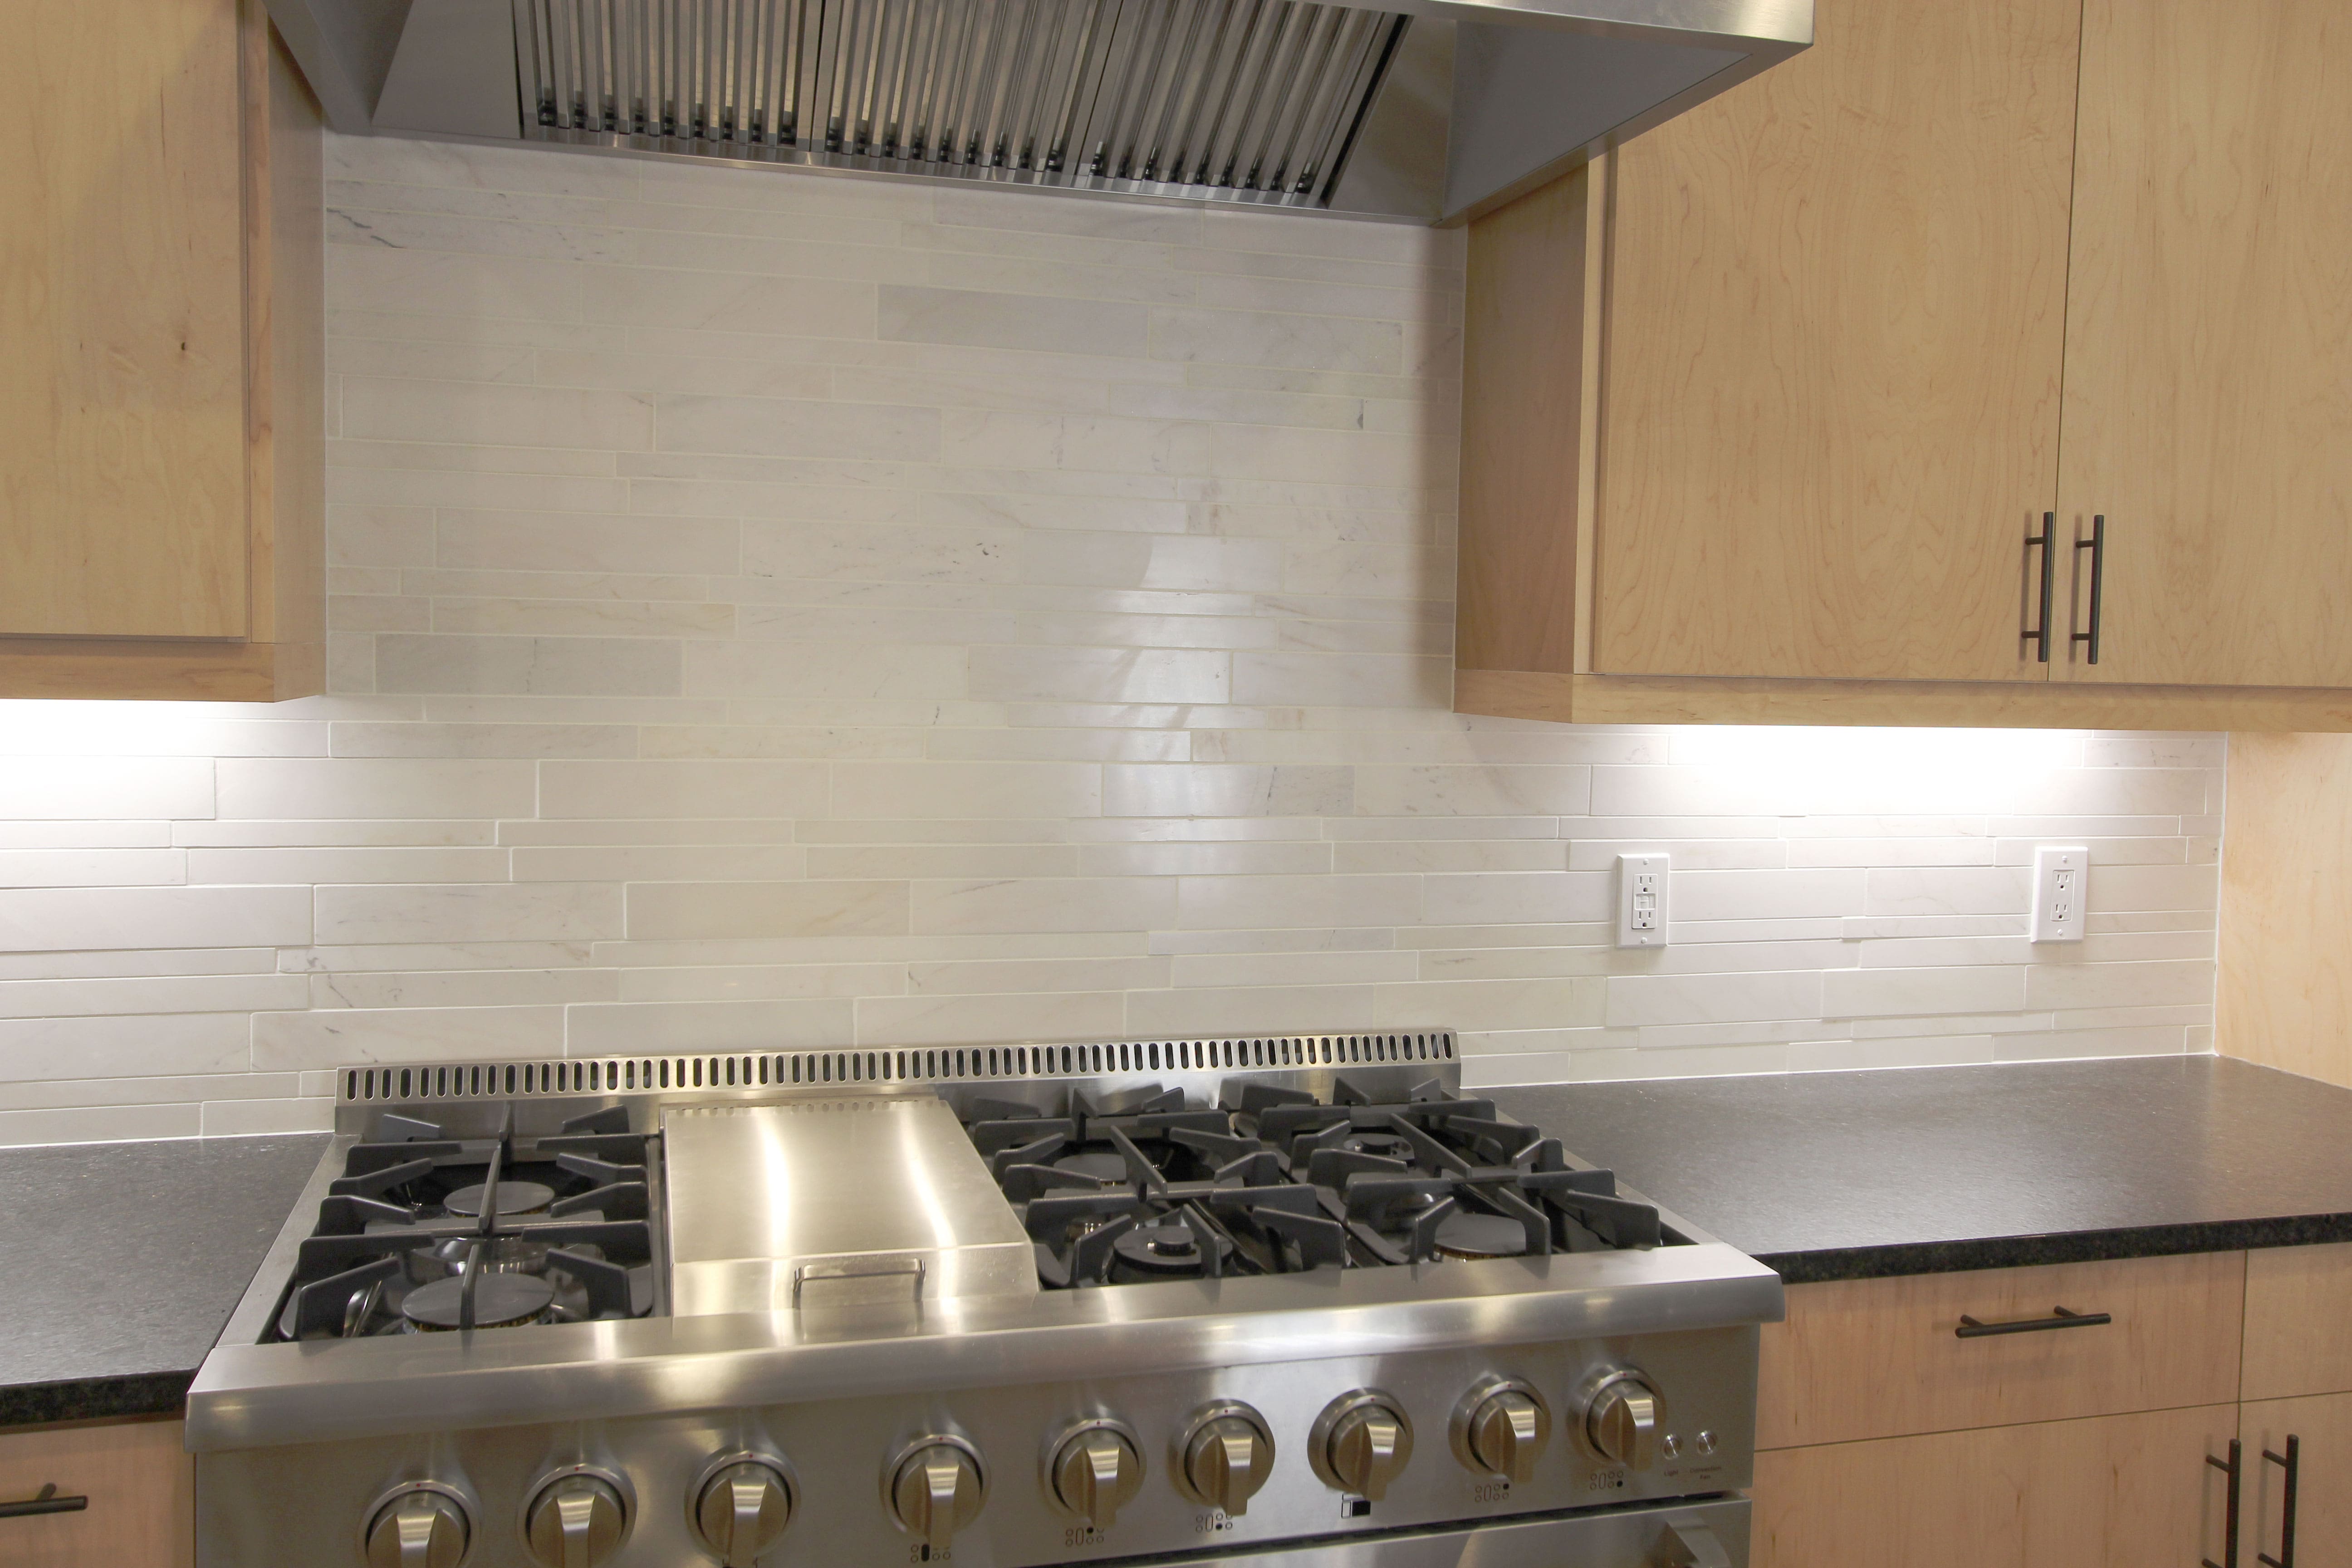 Norstone White Marble Lynia Interlocking Tiles used on a kitchen backsplash set against a large 6 burner stainless steel range and vent hood